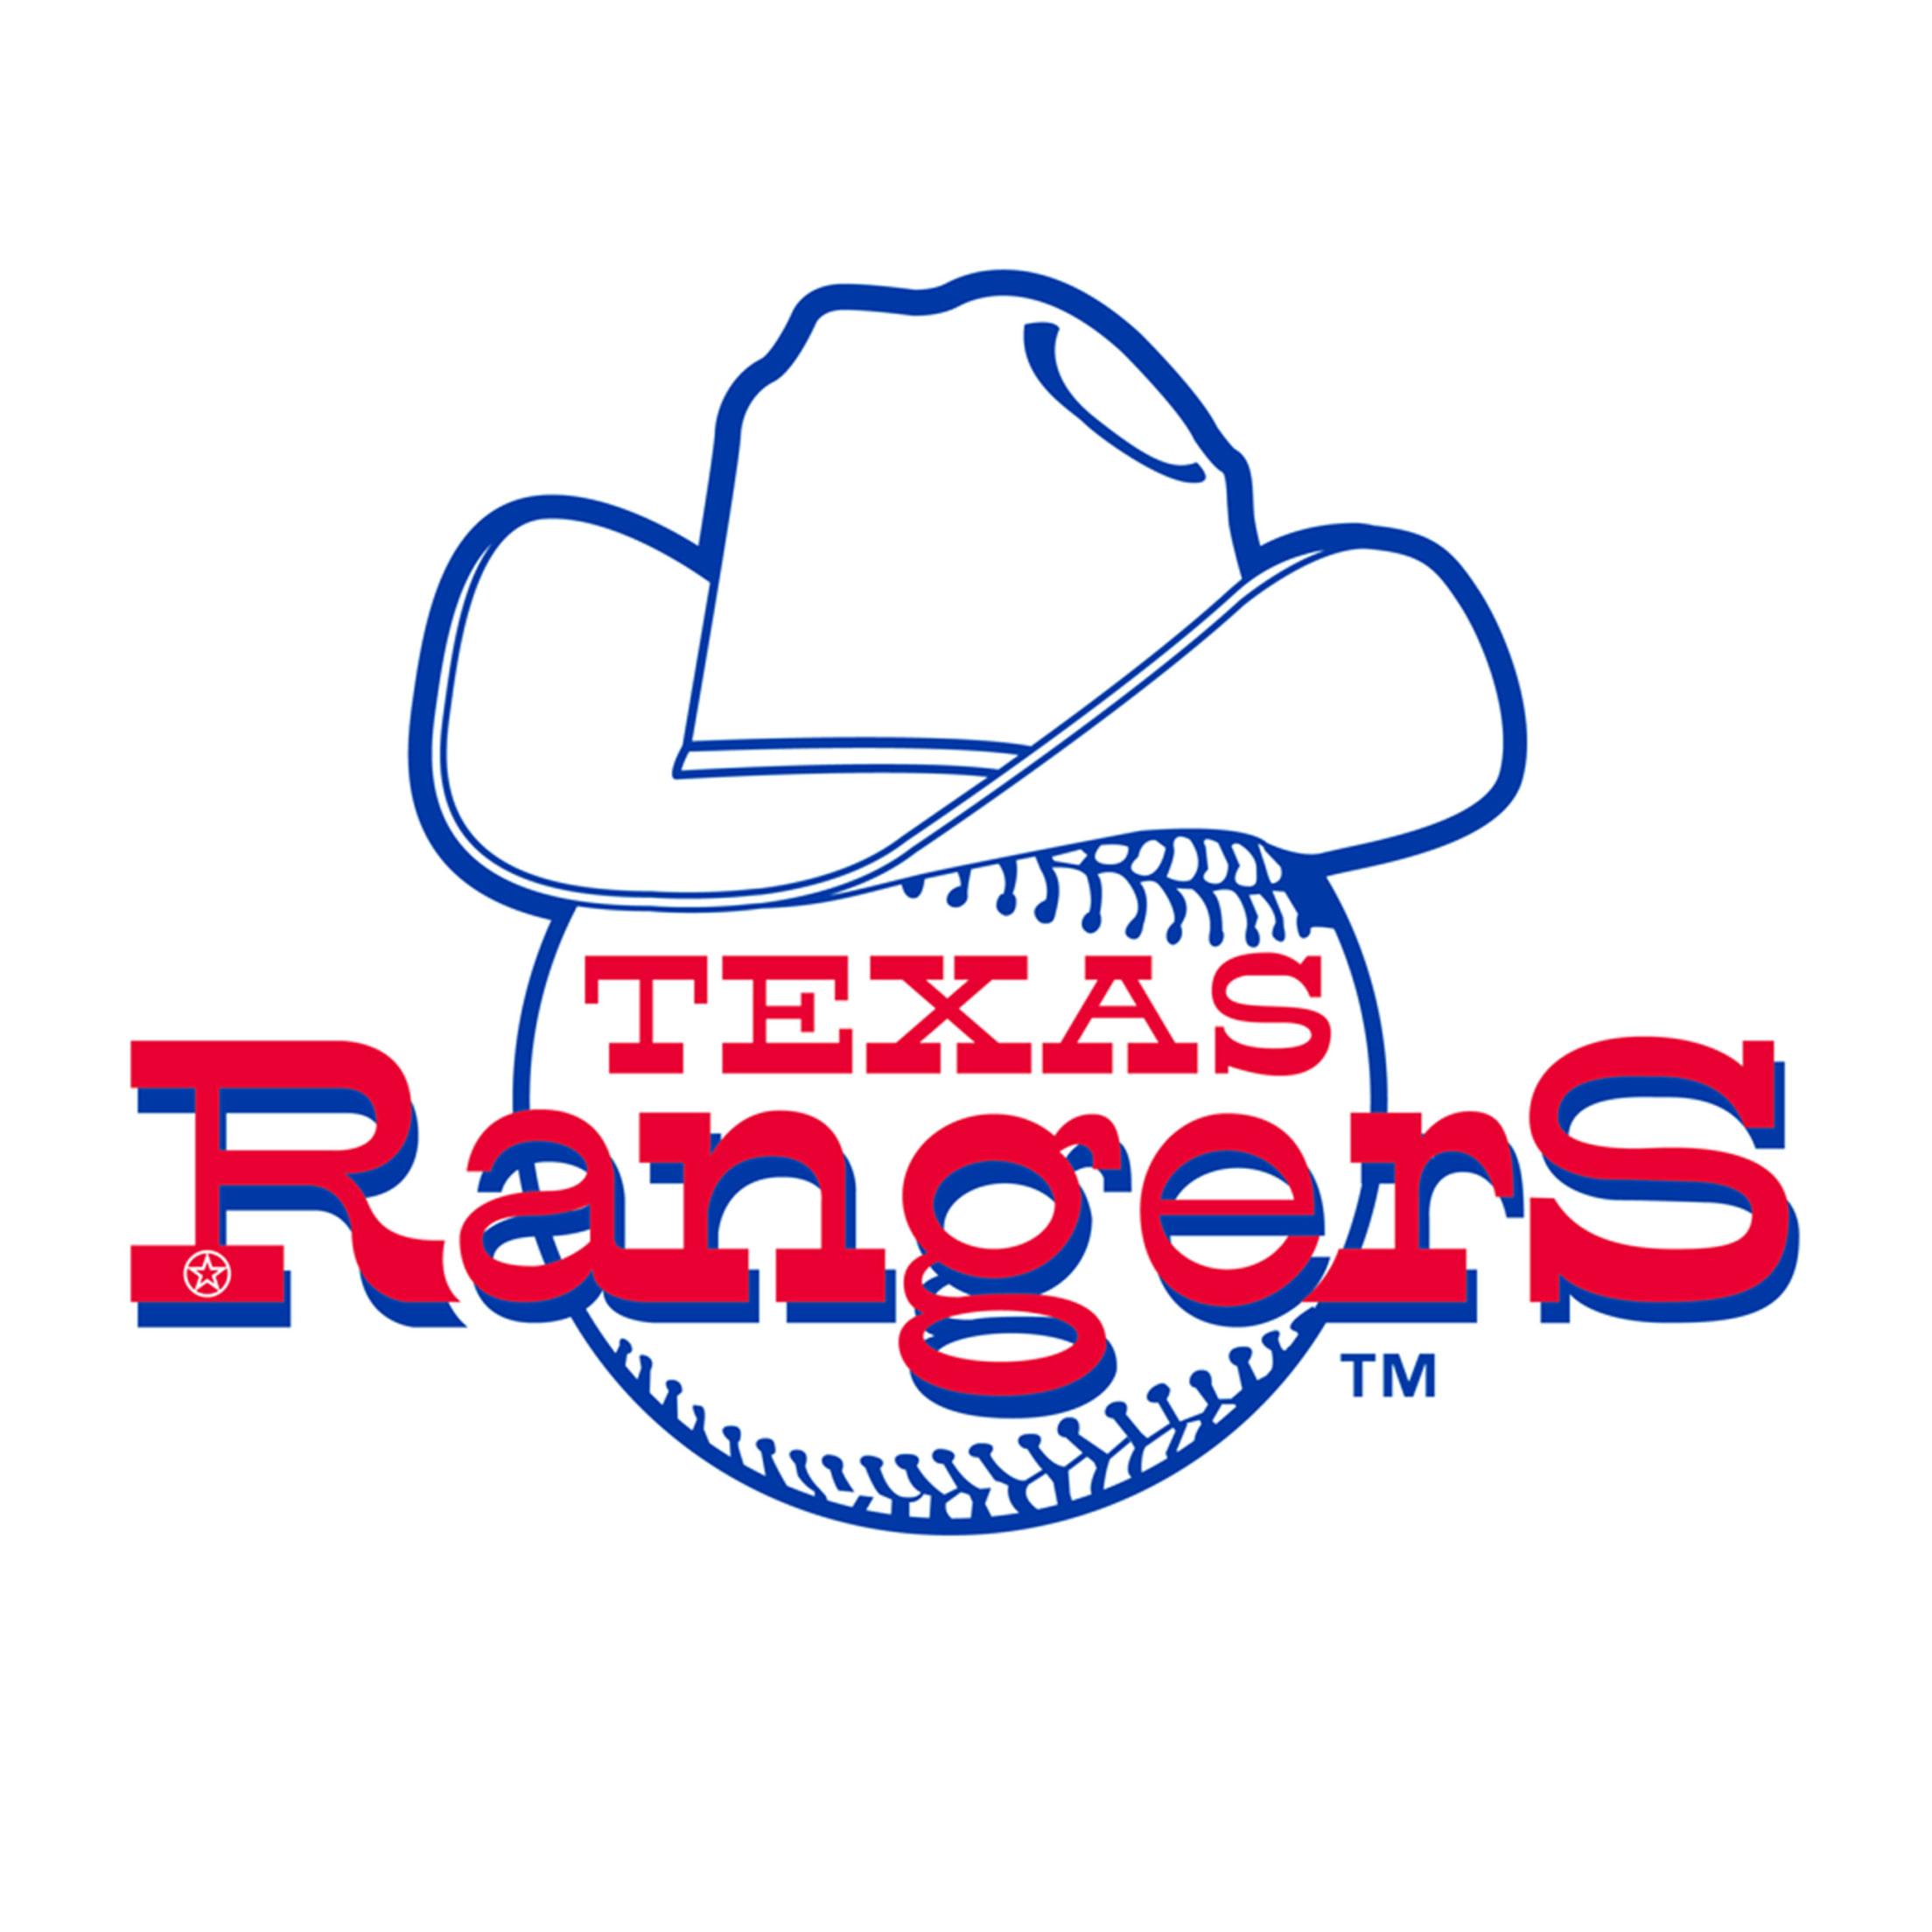 texas rangers jerseys through the years